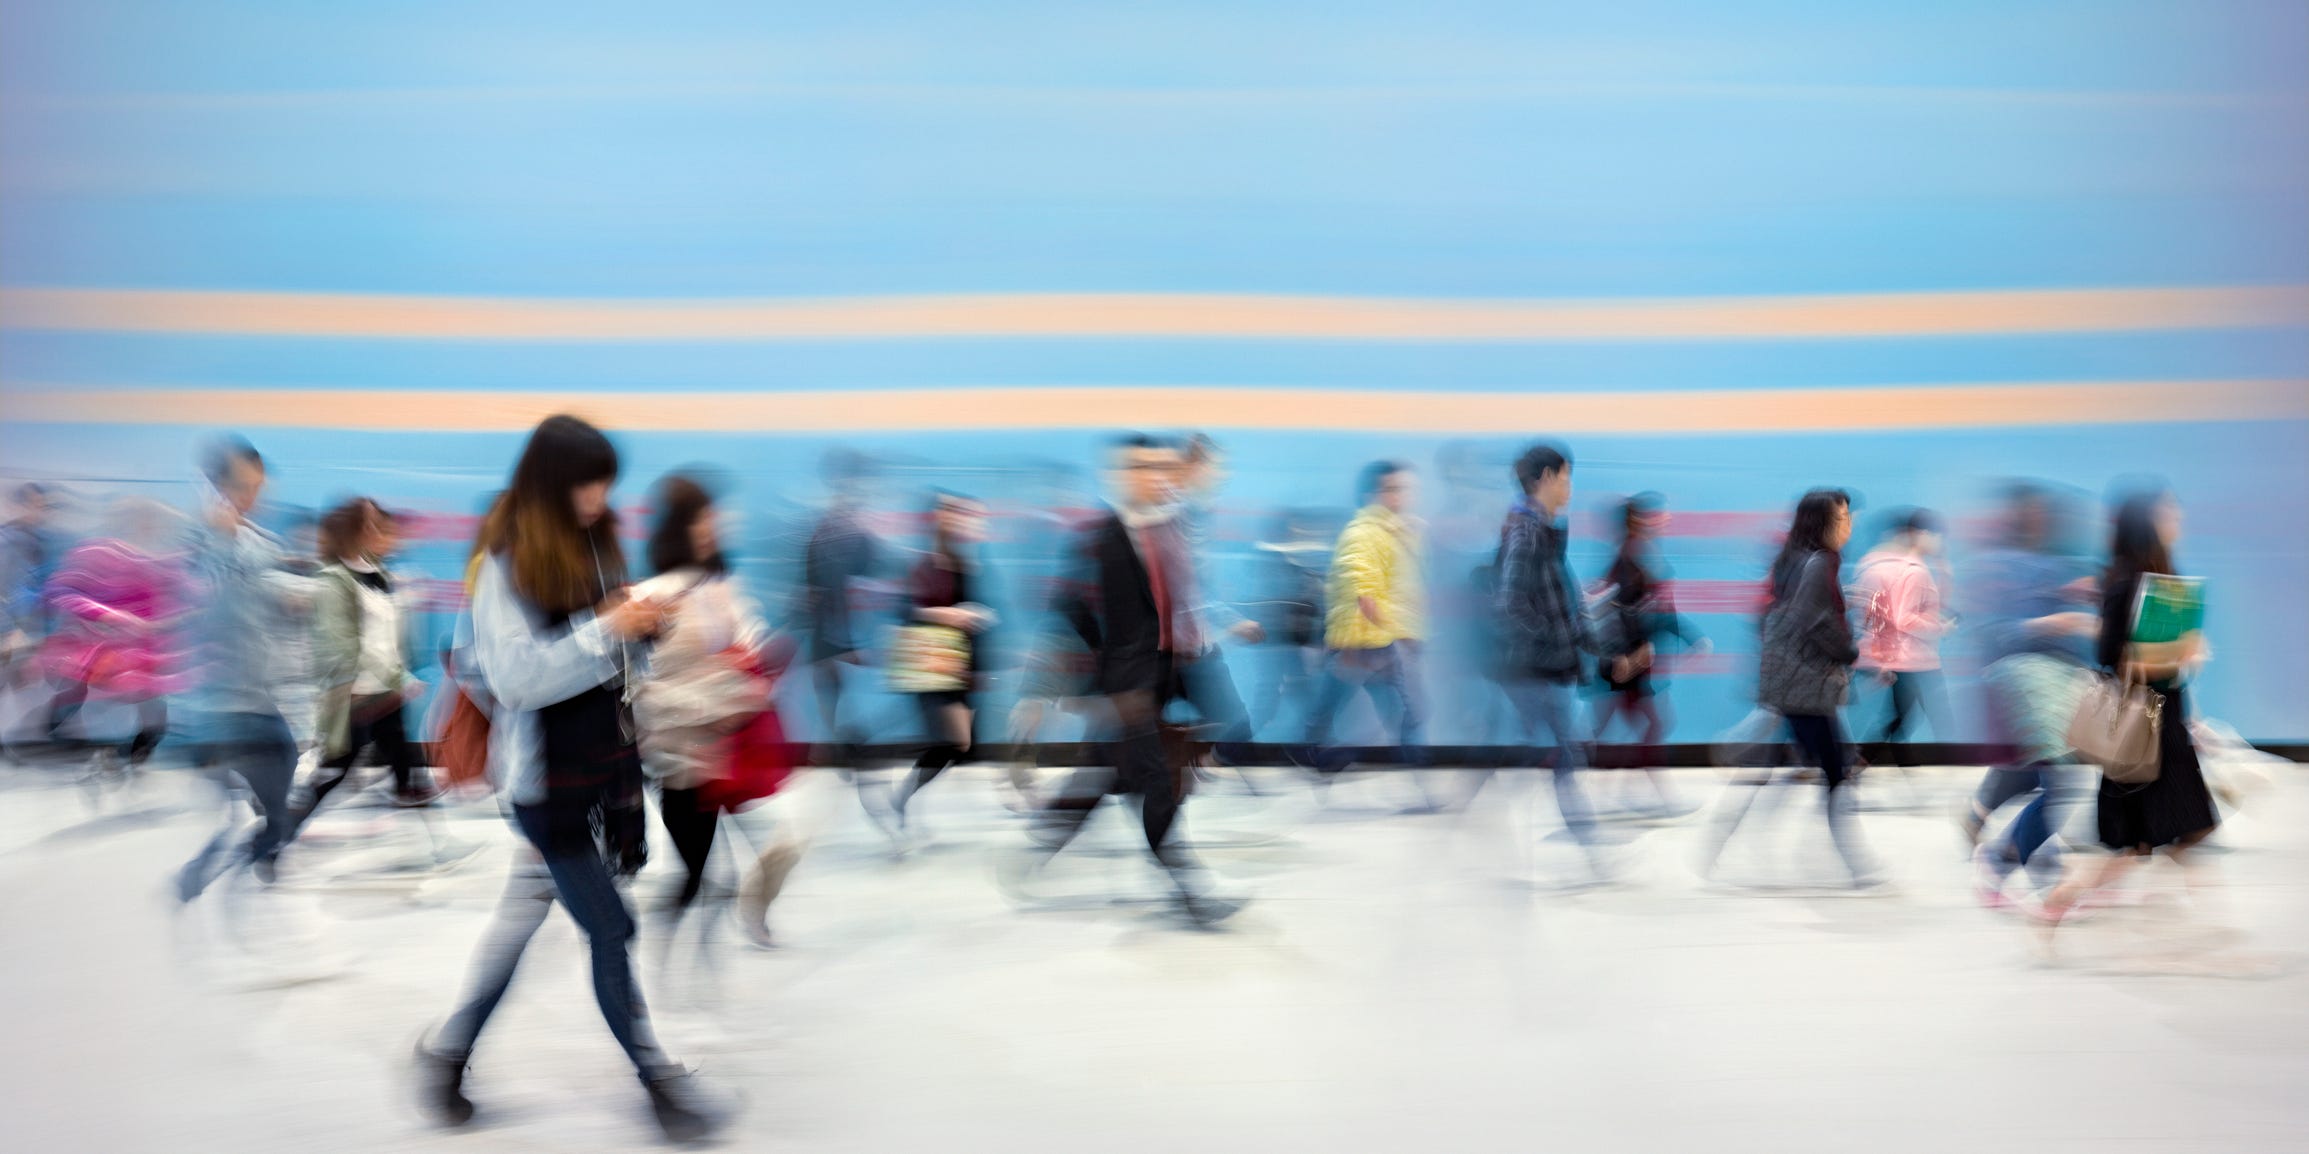 A blurred image of people walking across a sidewalk.